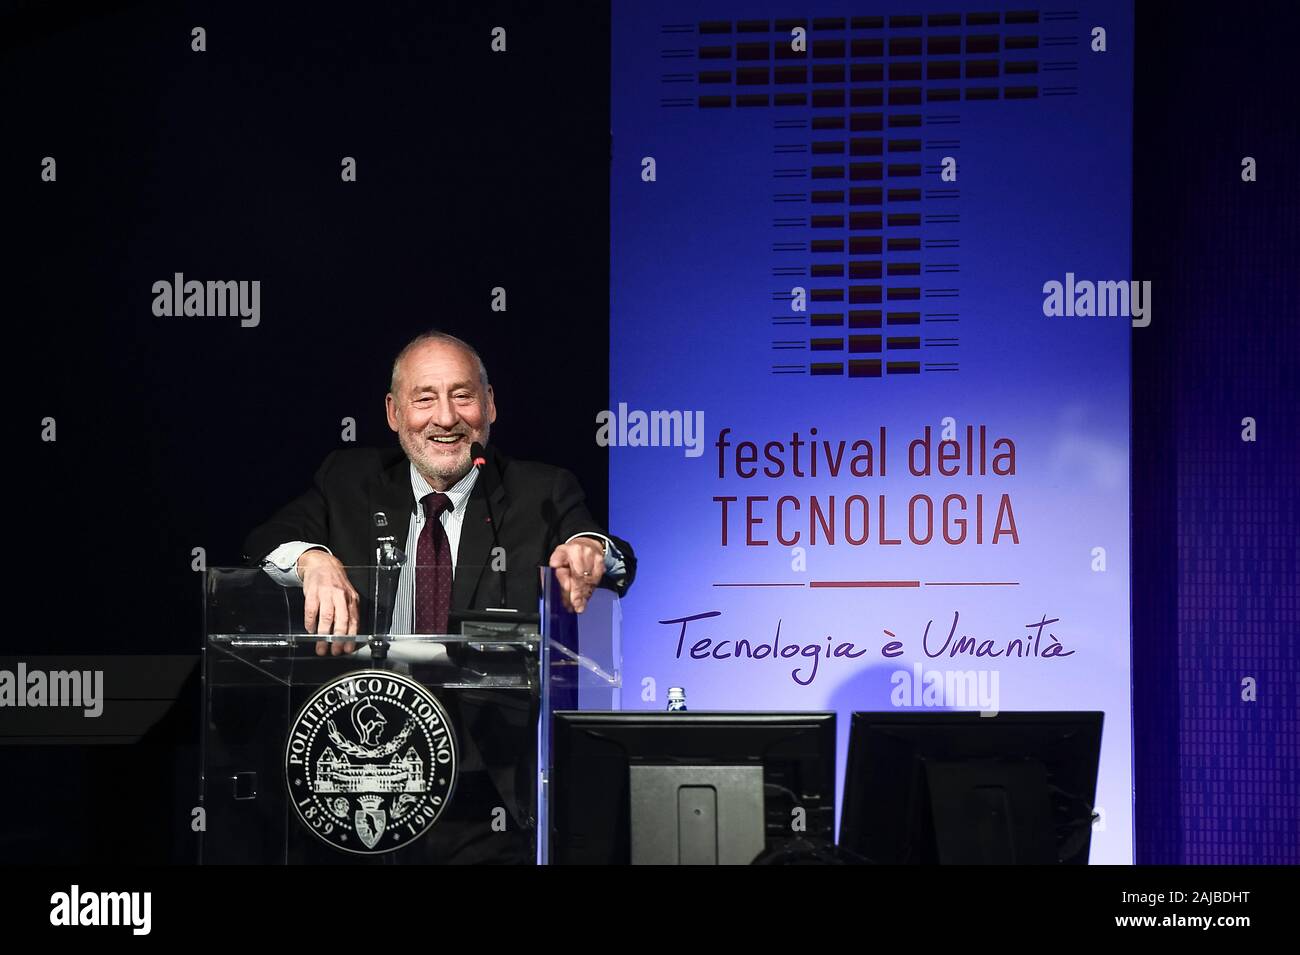 Turin, Italy - 07 November, 2019: Joseph Stiglitz speaks on stage during the ceremony to receives Laurea ad Honorem (Honoris Causa degree) by the Politecnico di Torino. Credit: Nicolò Campo/Alamy Live News Stock Photo